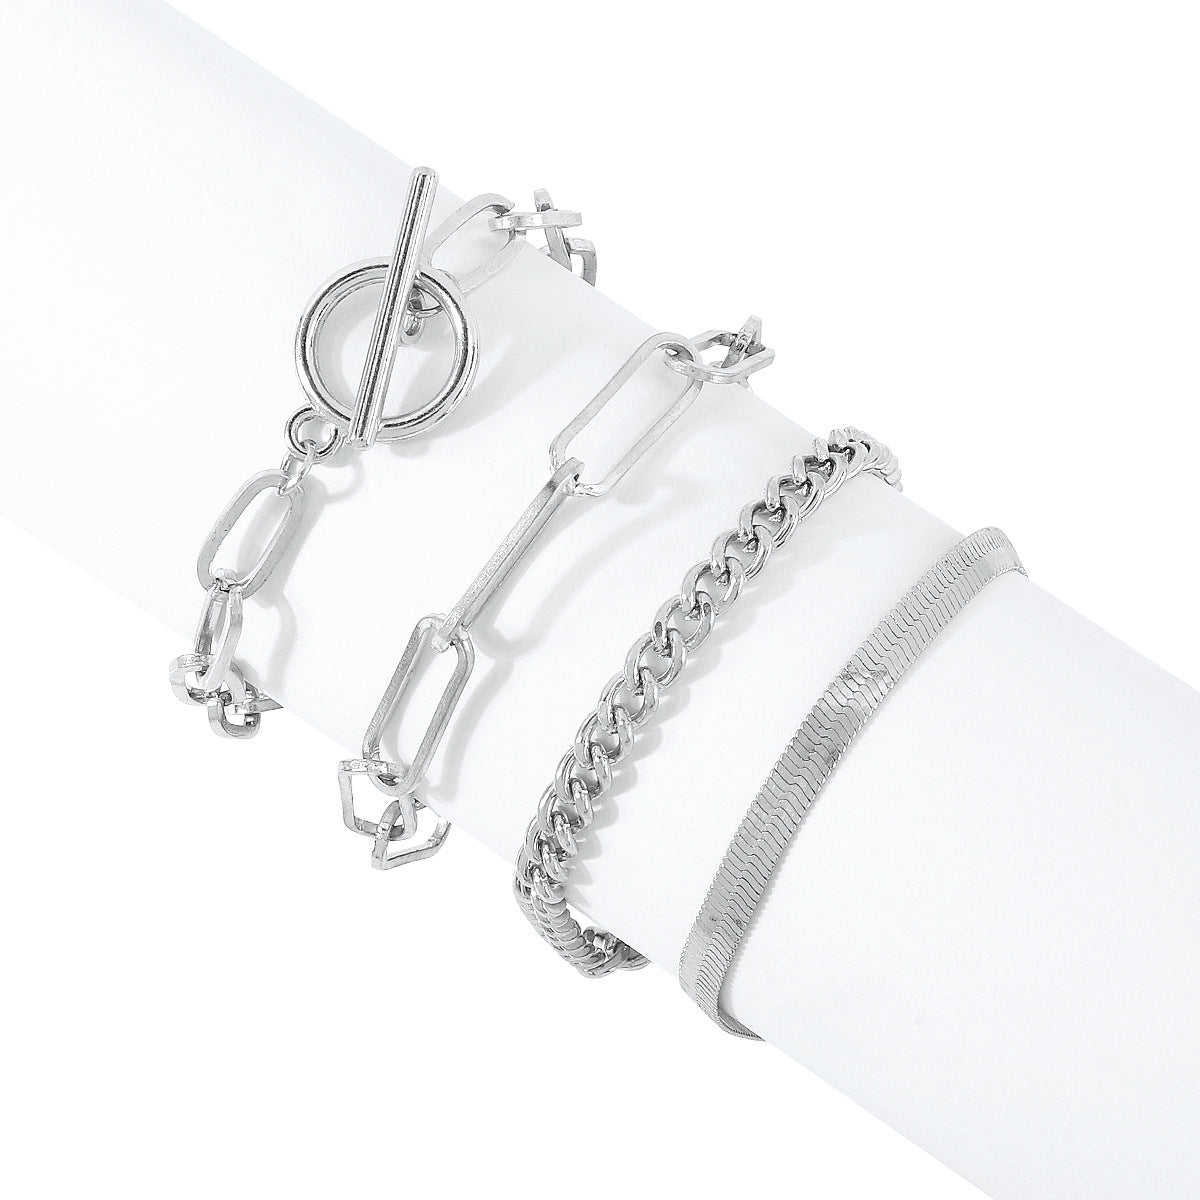 Silver-Plated Herringbone Bracelet Set